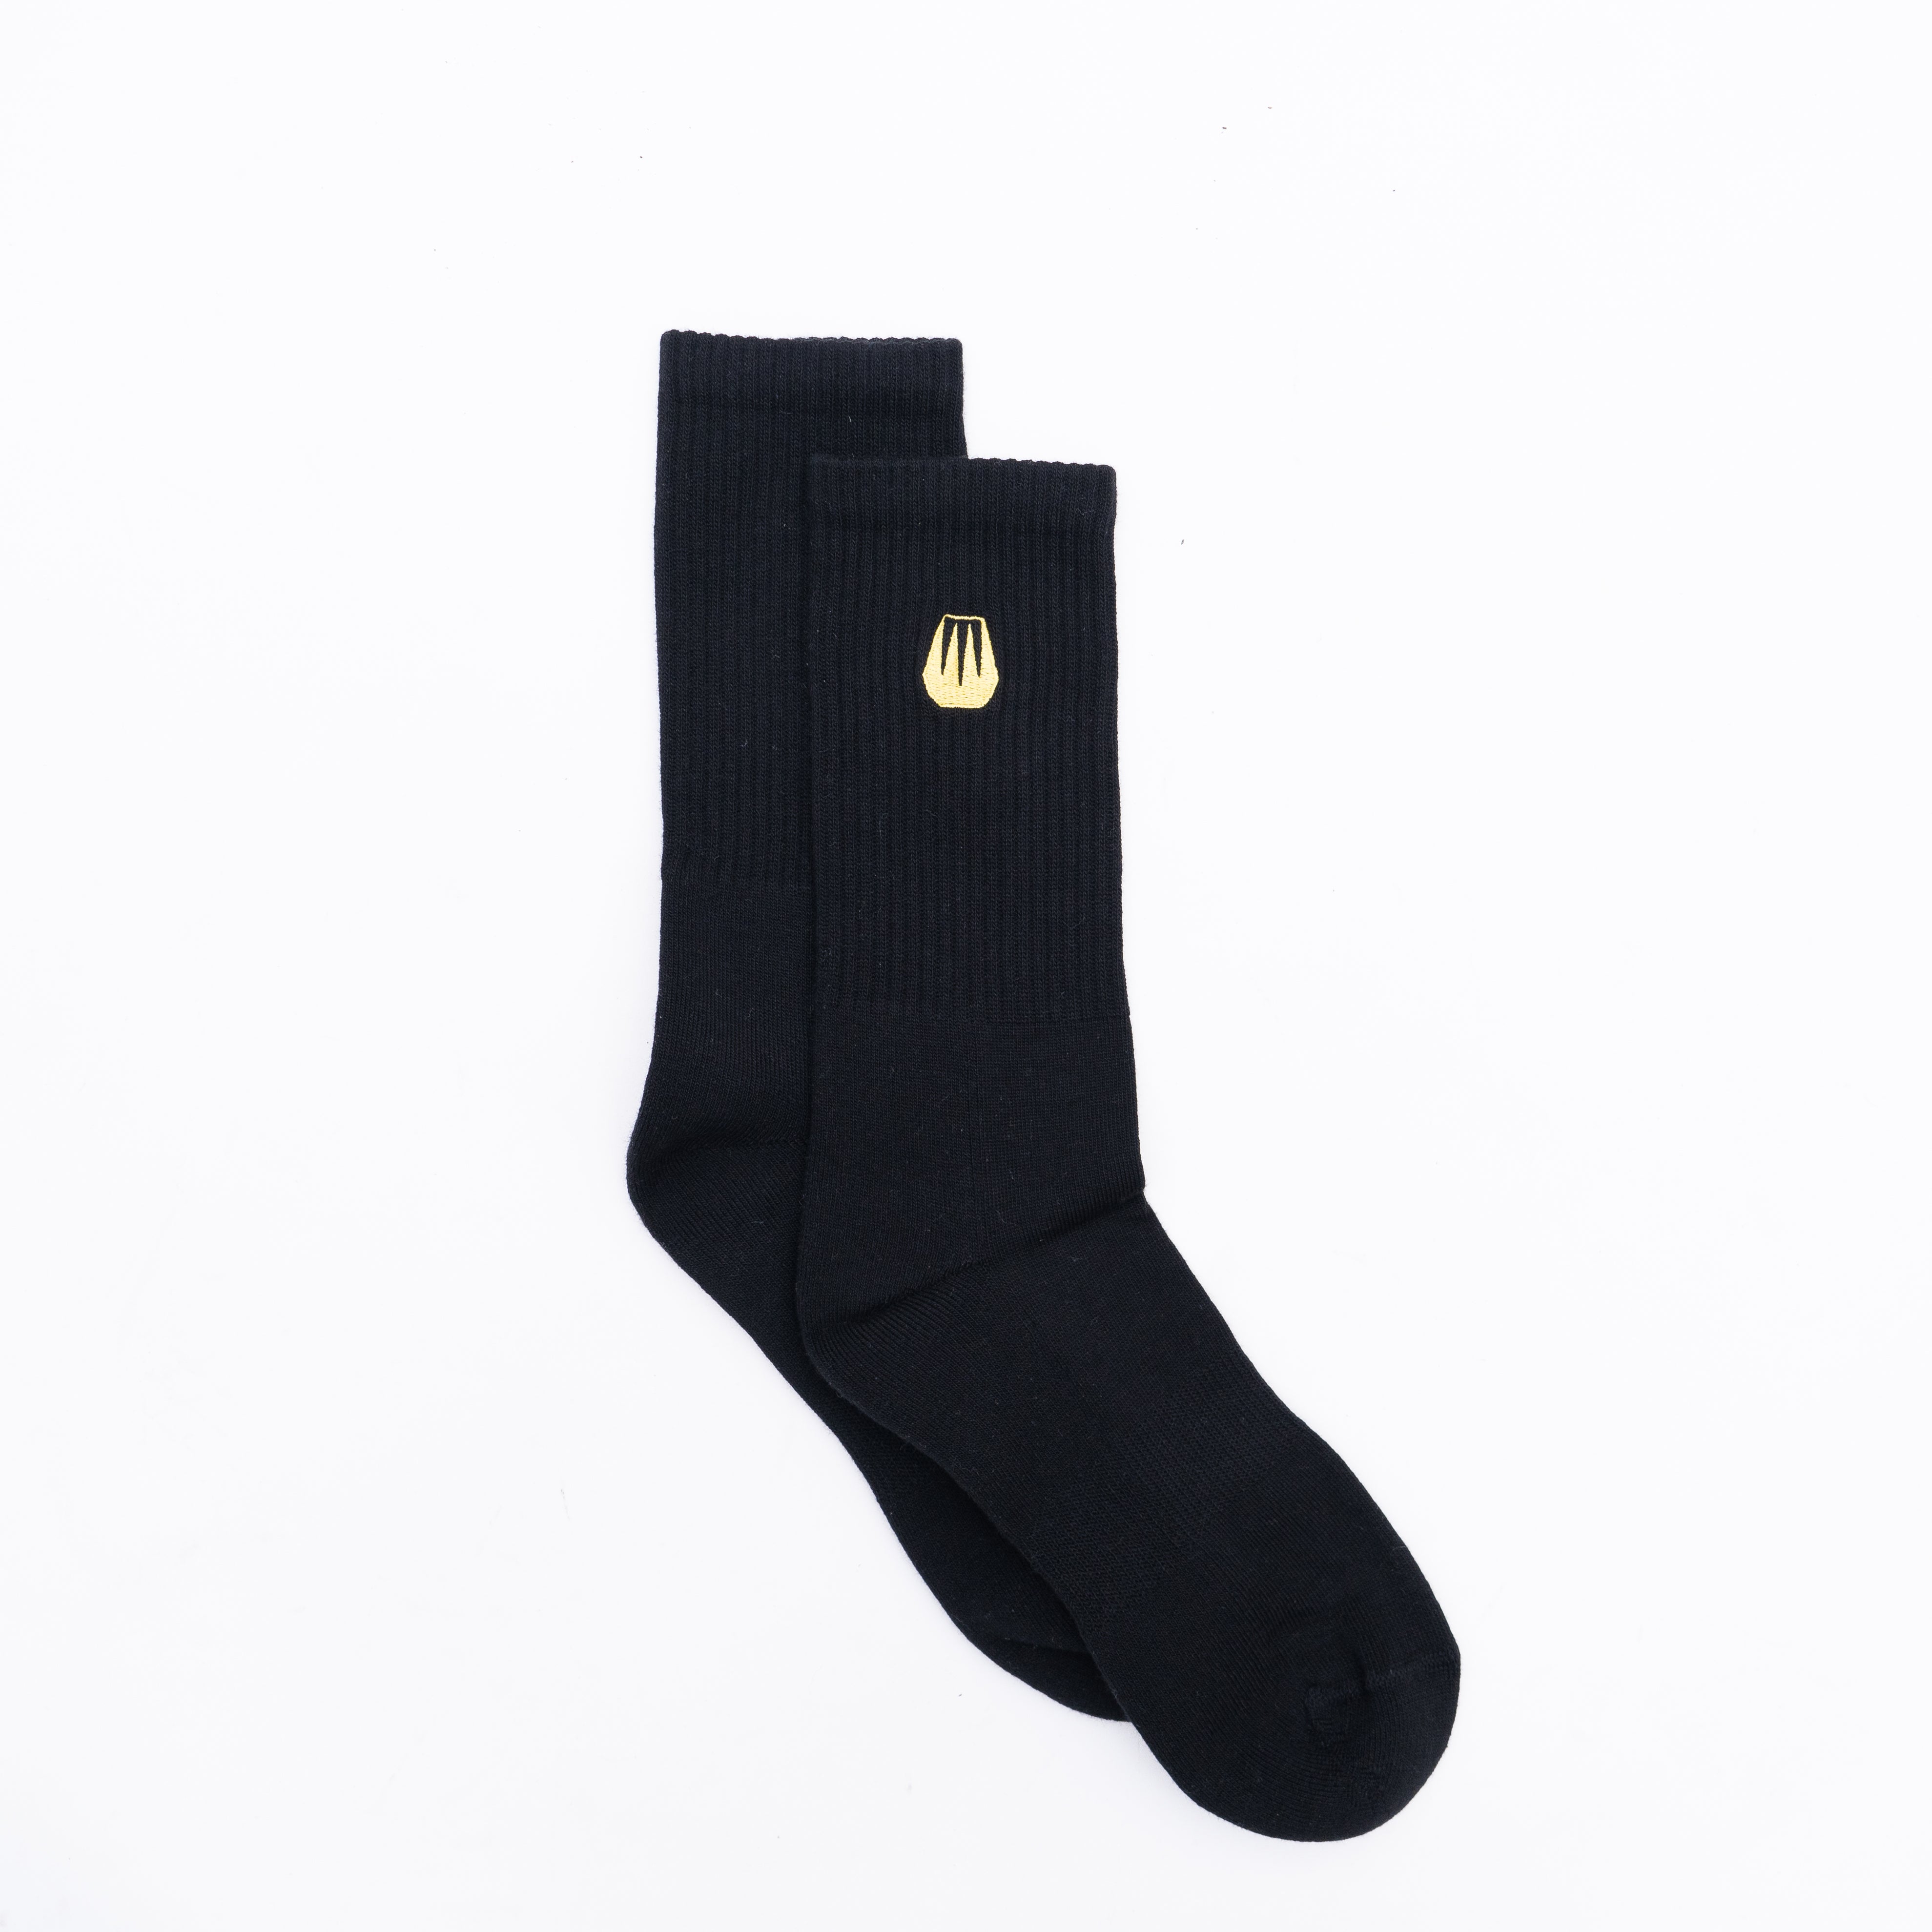 Ementa Socks Black